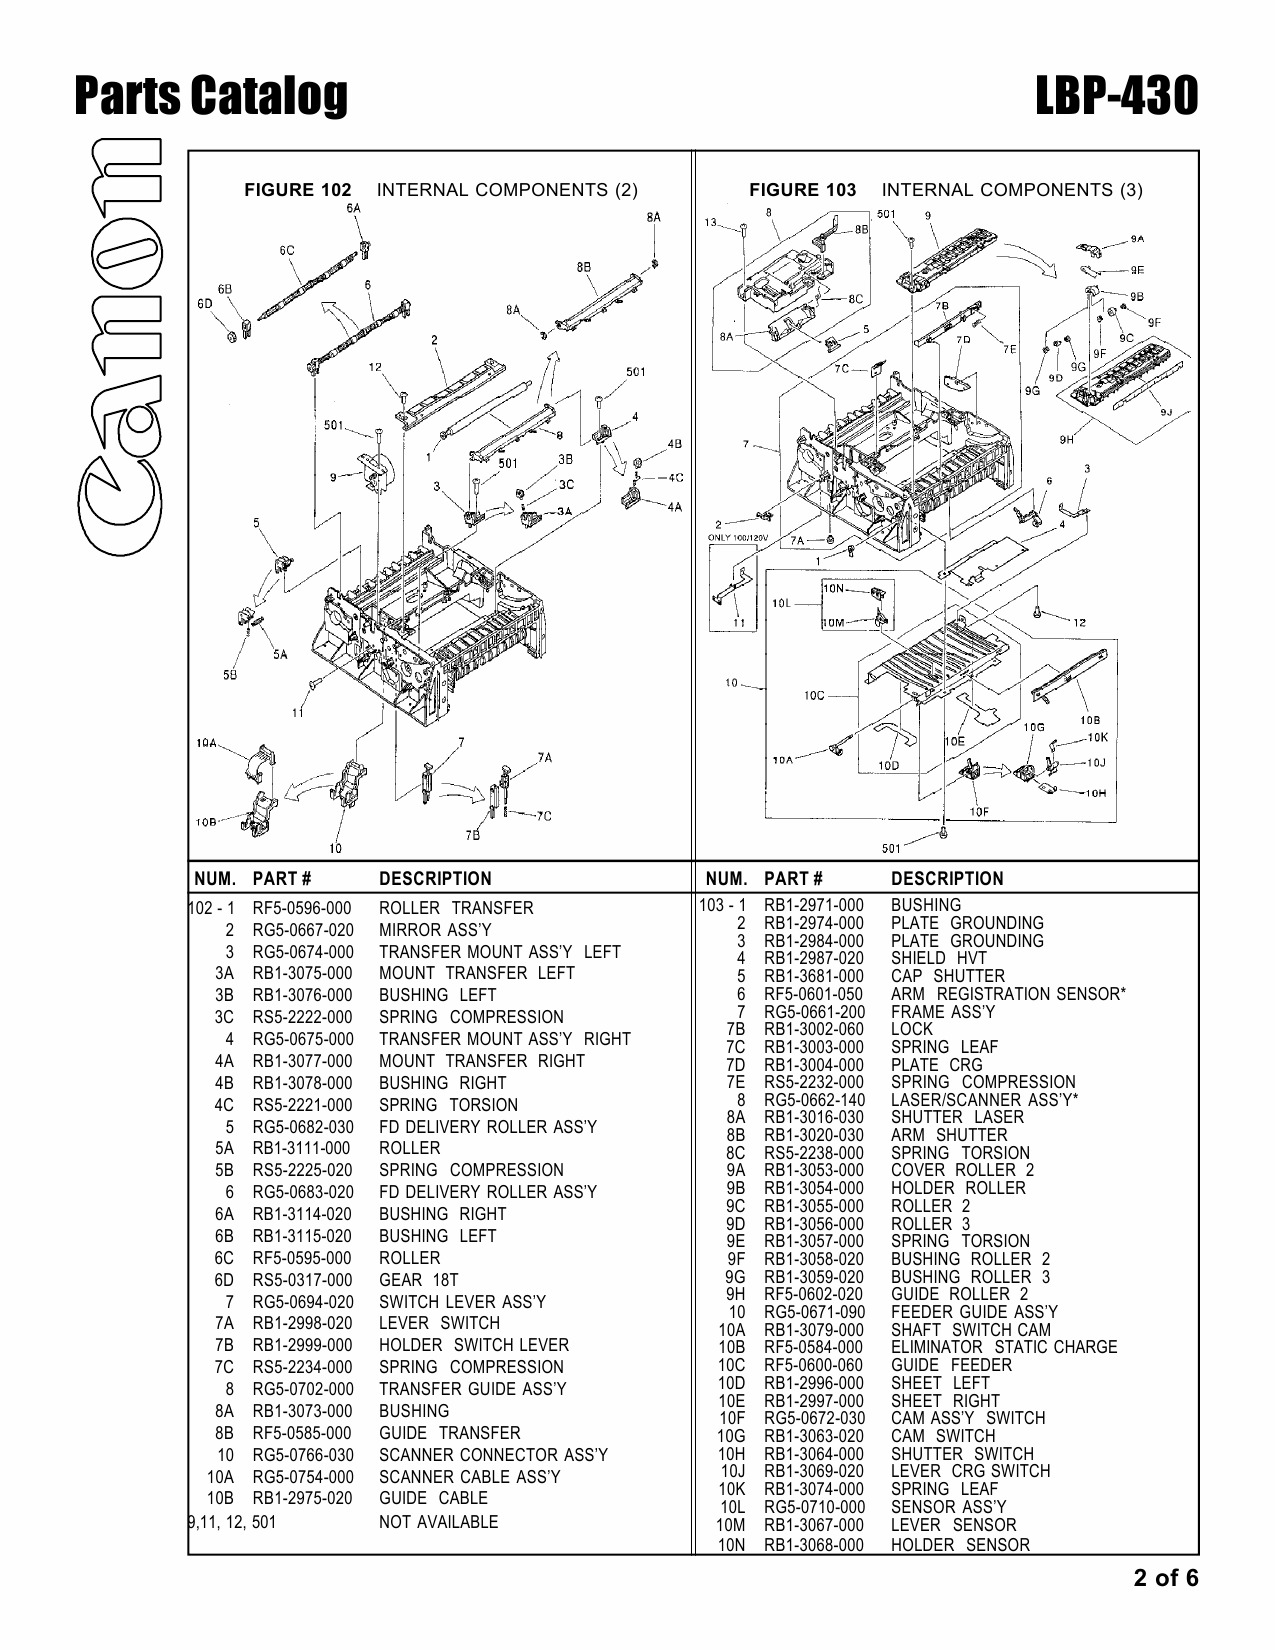 Canon imageCLASS LBP-430 Parts Catalog Manual-2